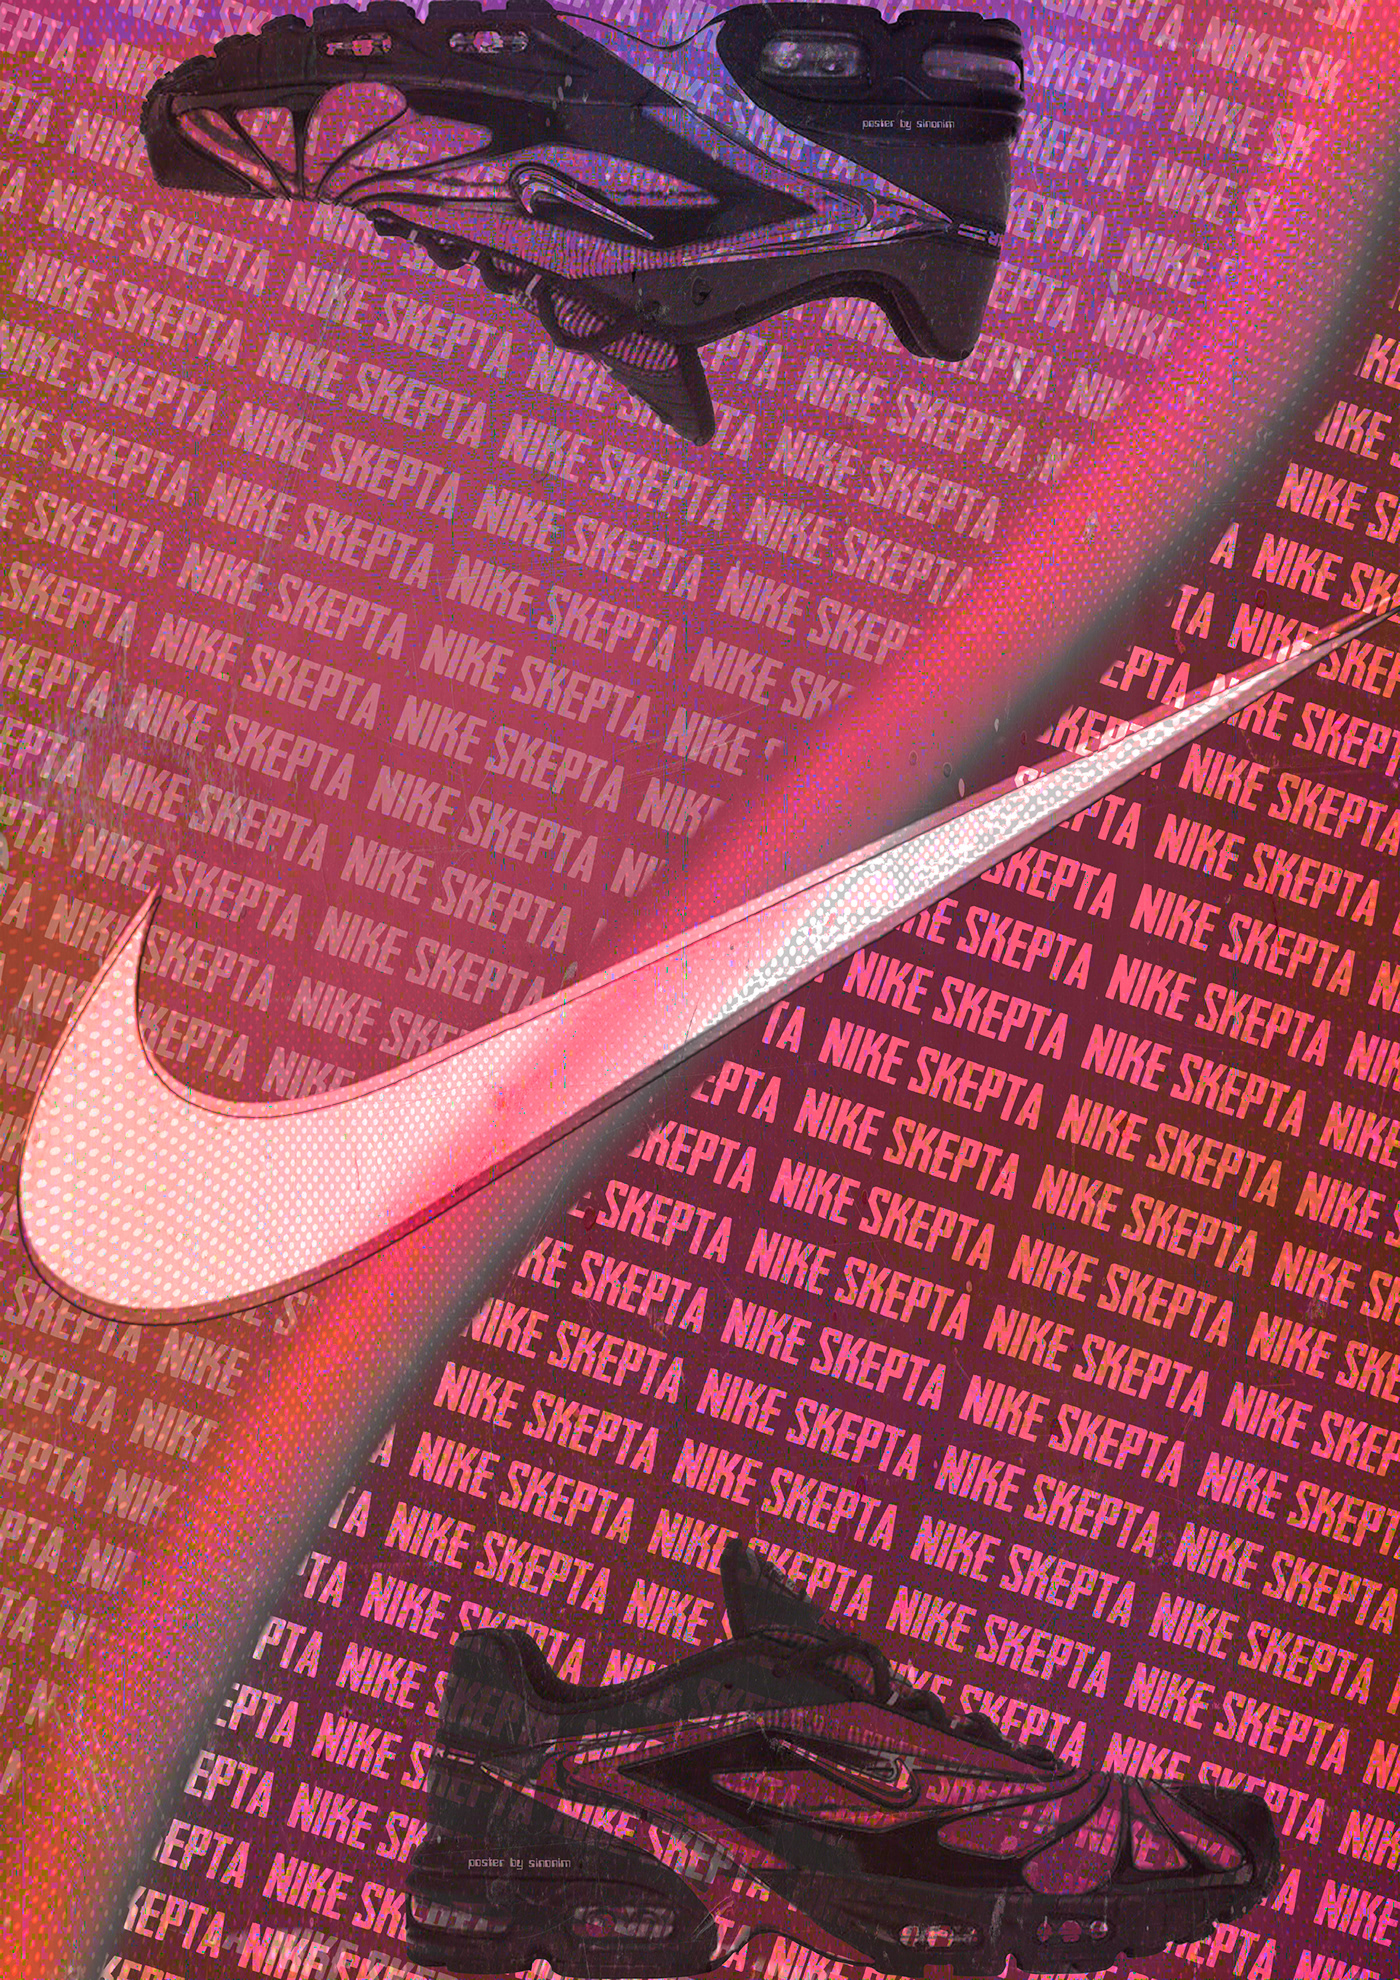 Nike skepta advertising flyer